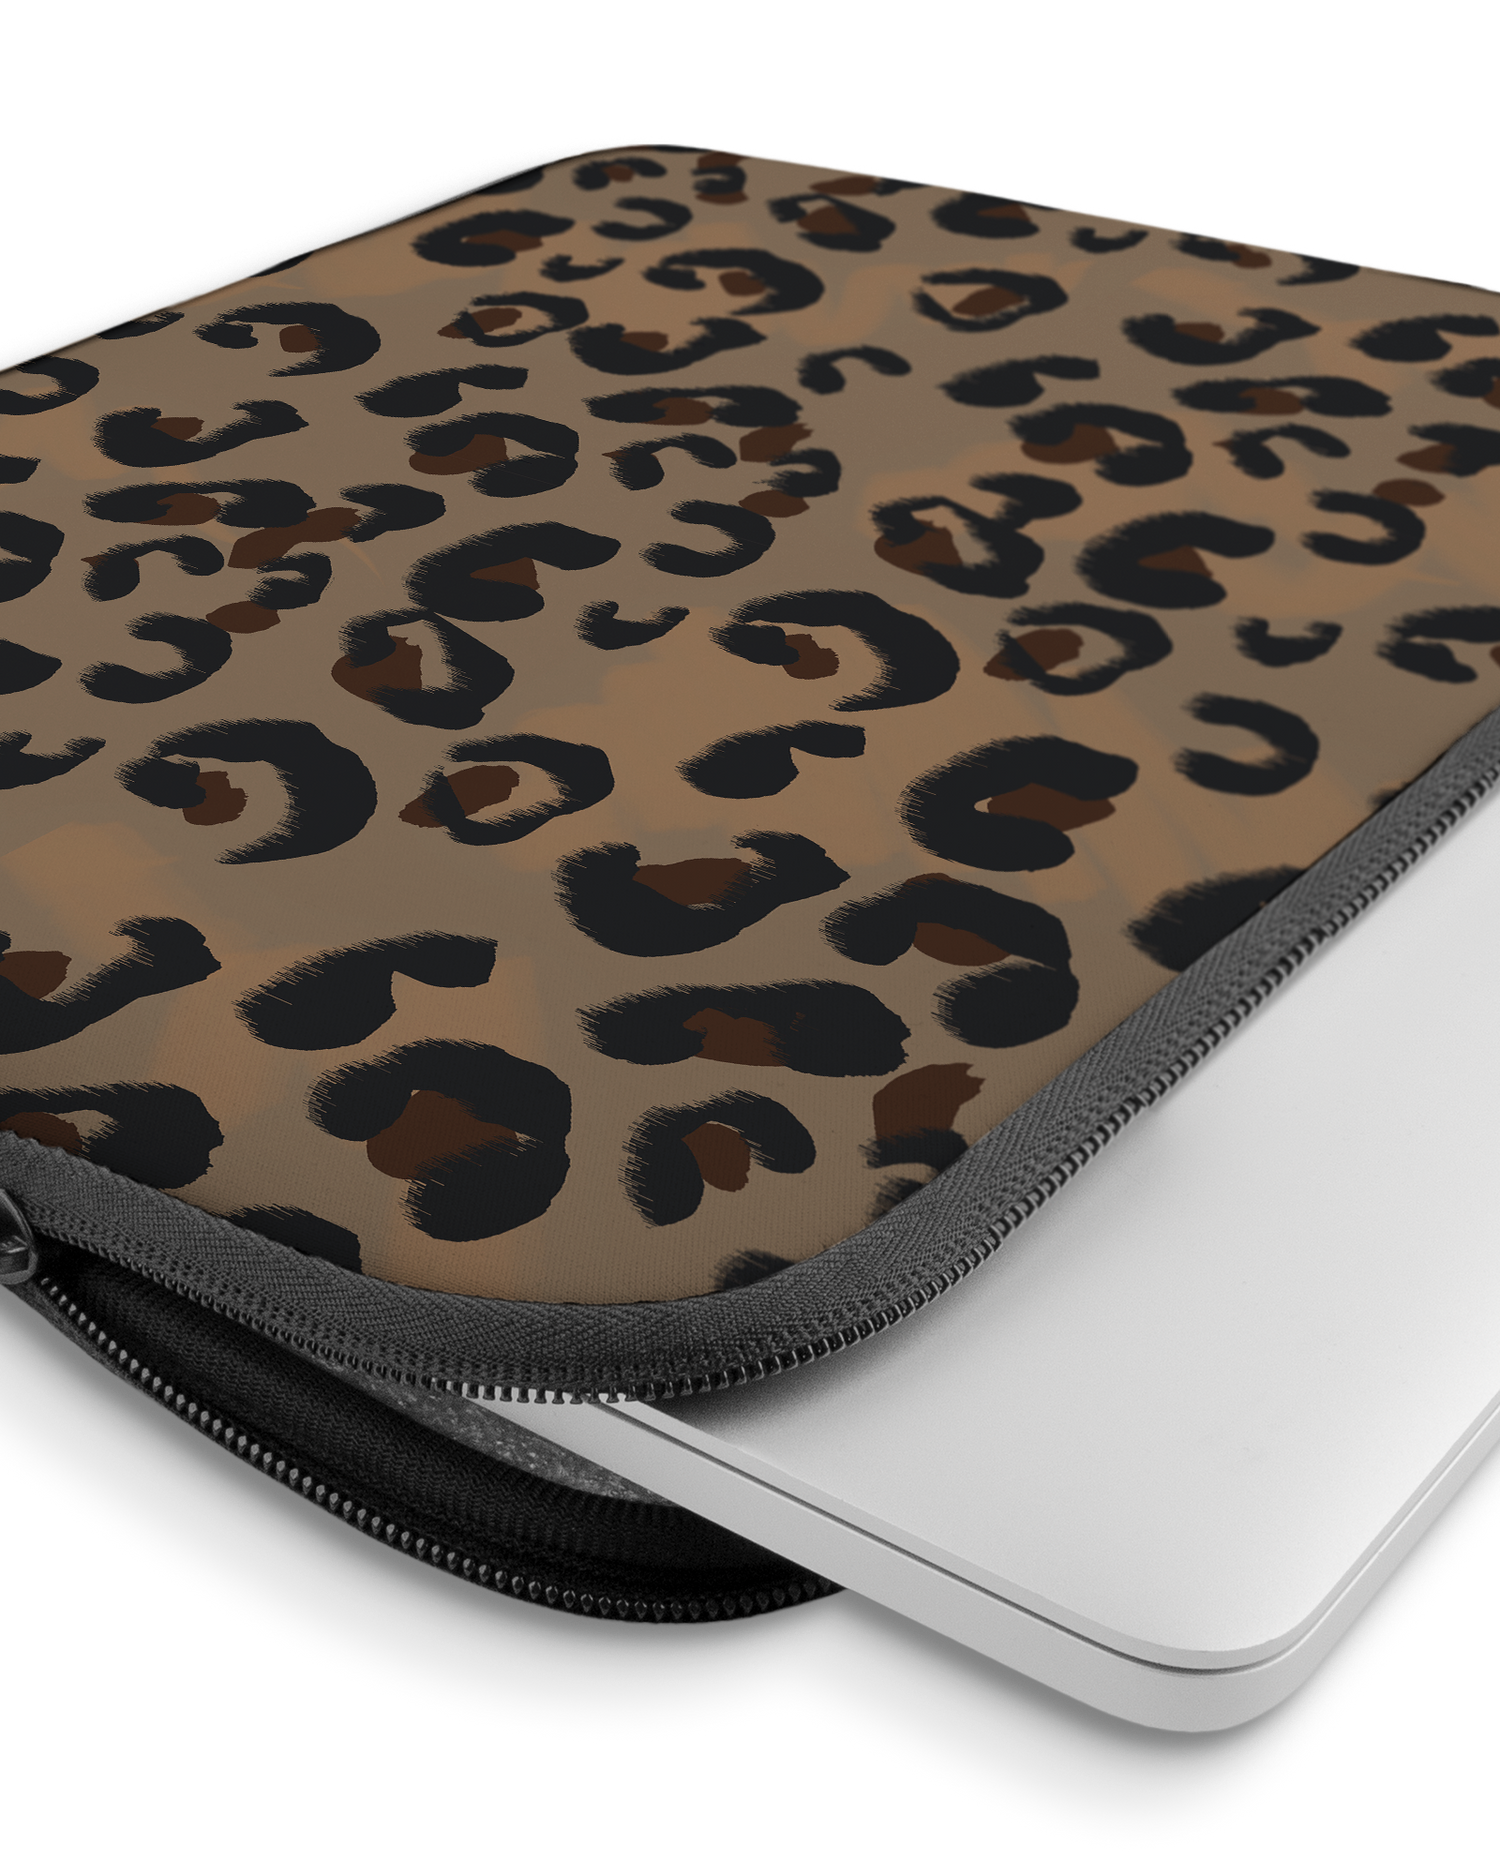 Leopard Repeat Laptophülle 15 Zoll mit Gerät im Inneren